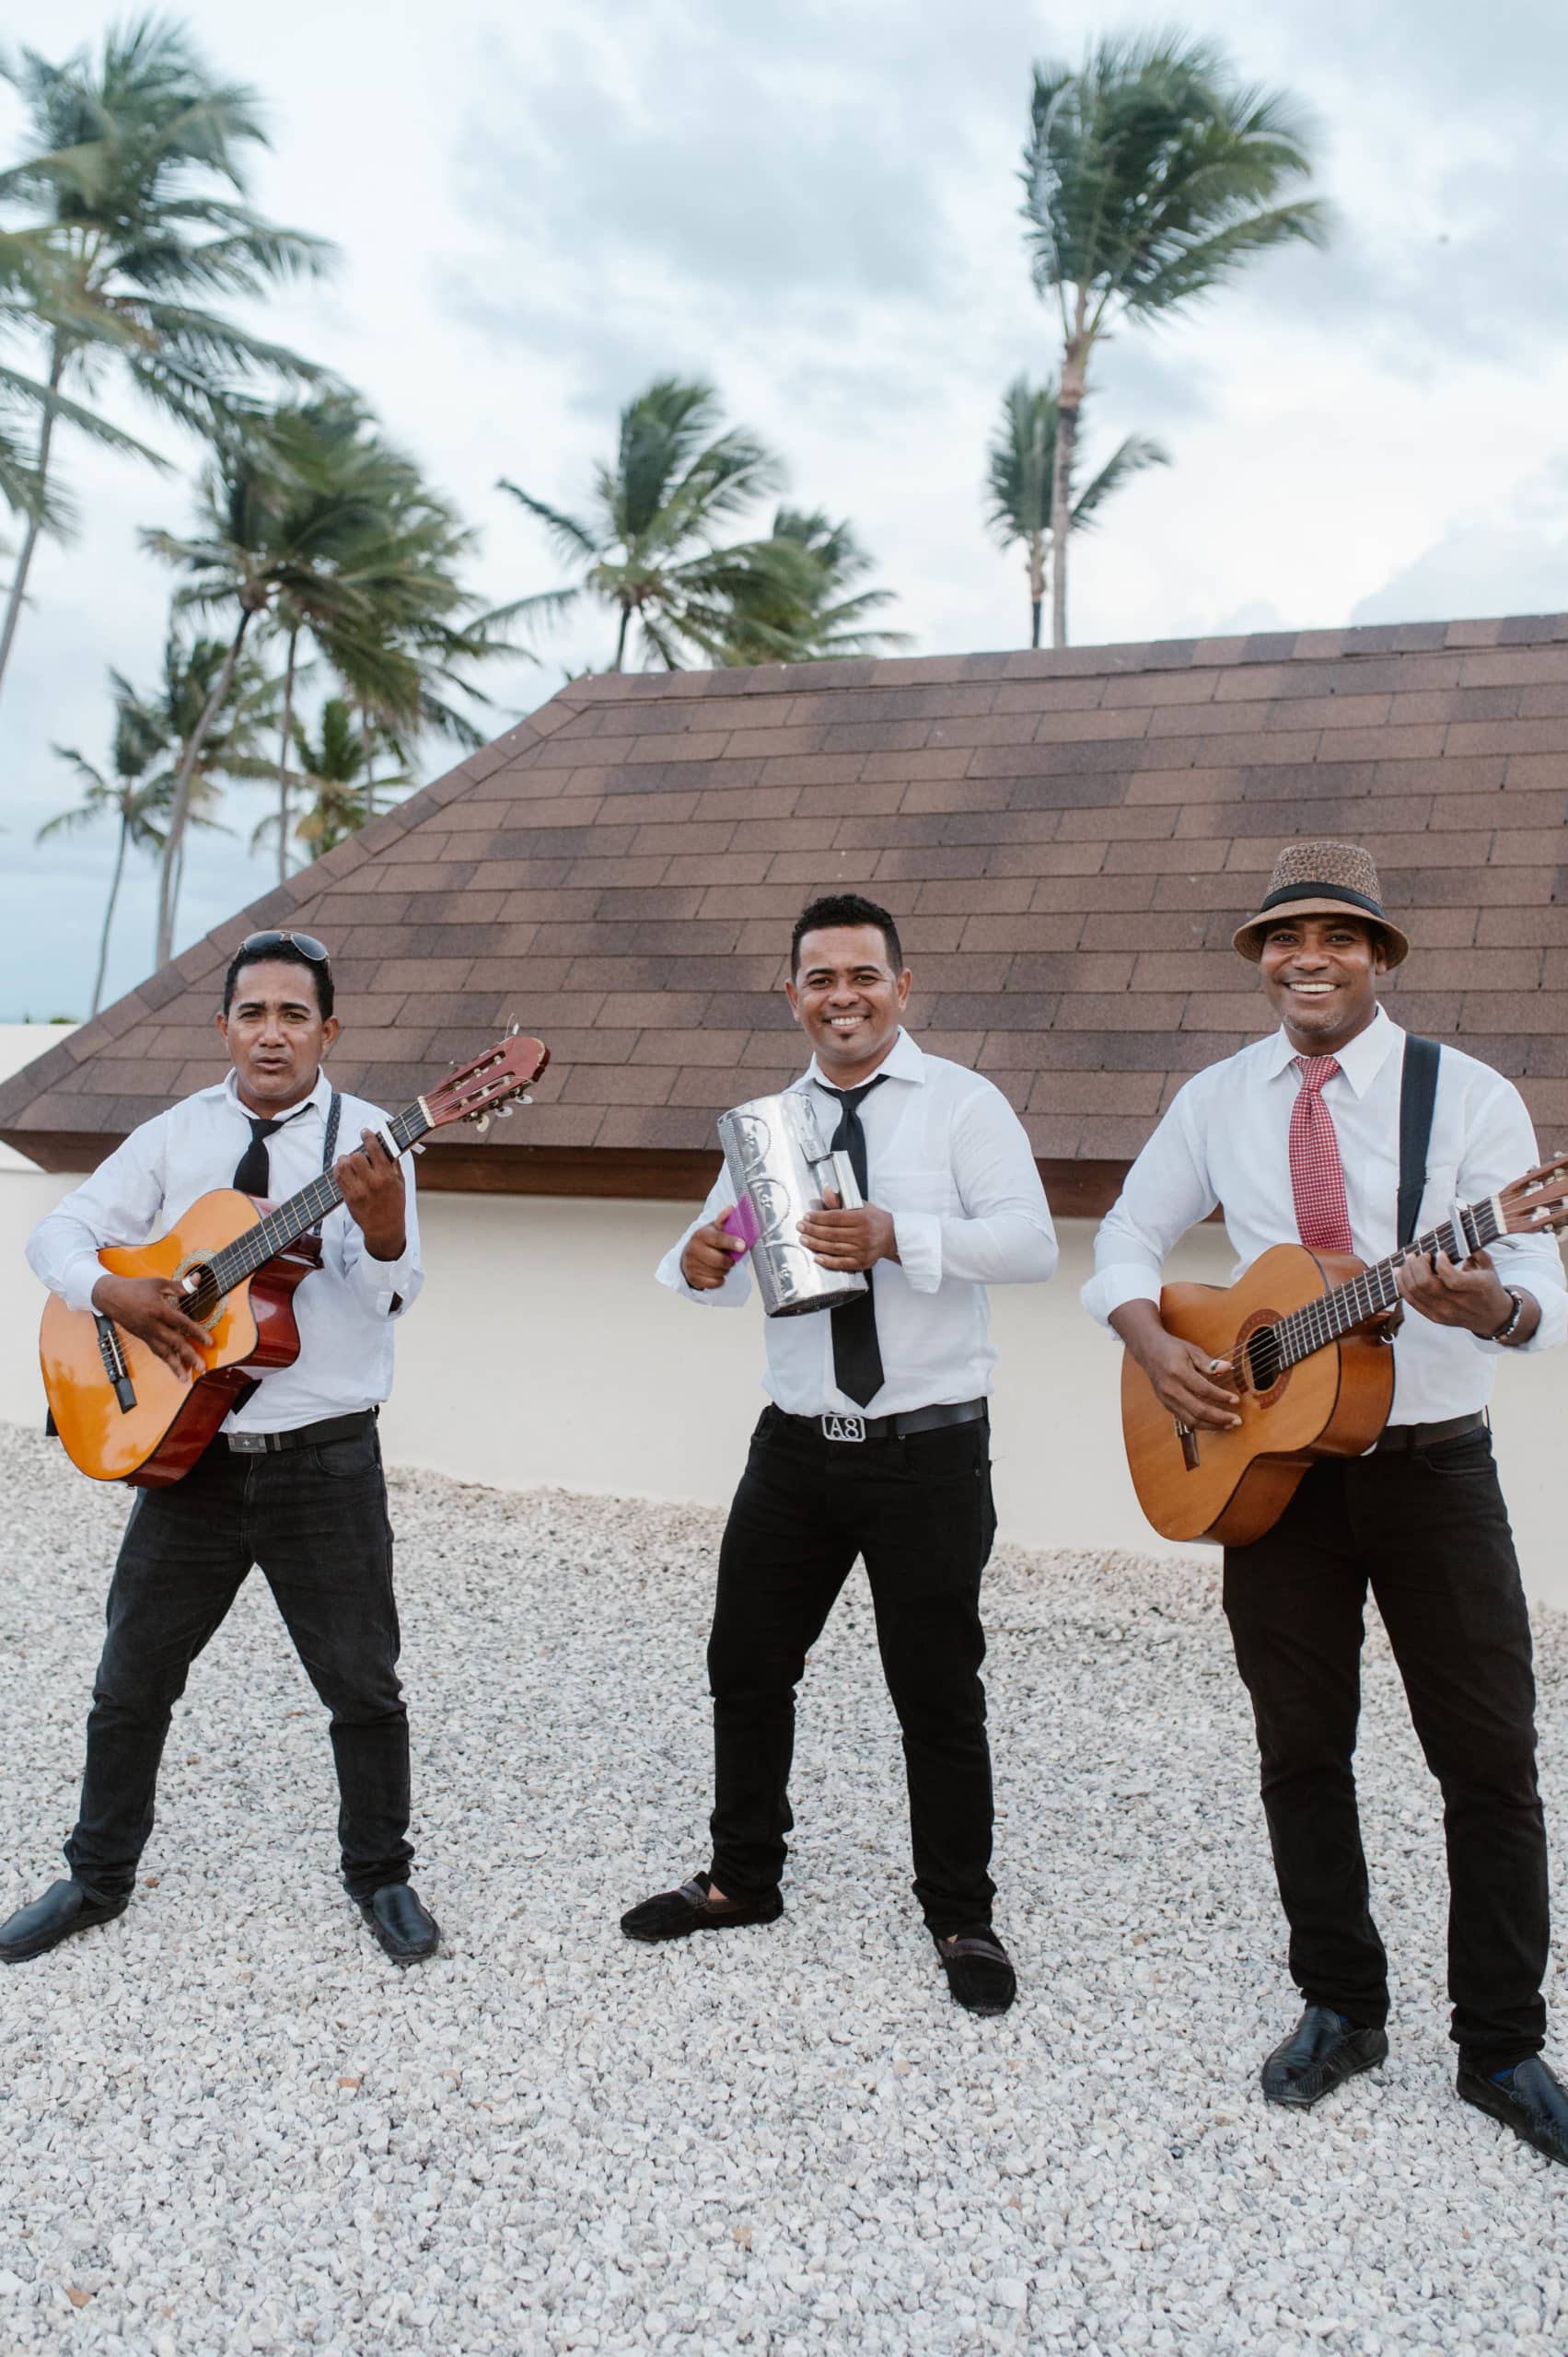 Mariachi band at a rooftop destination wedding reception